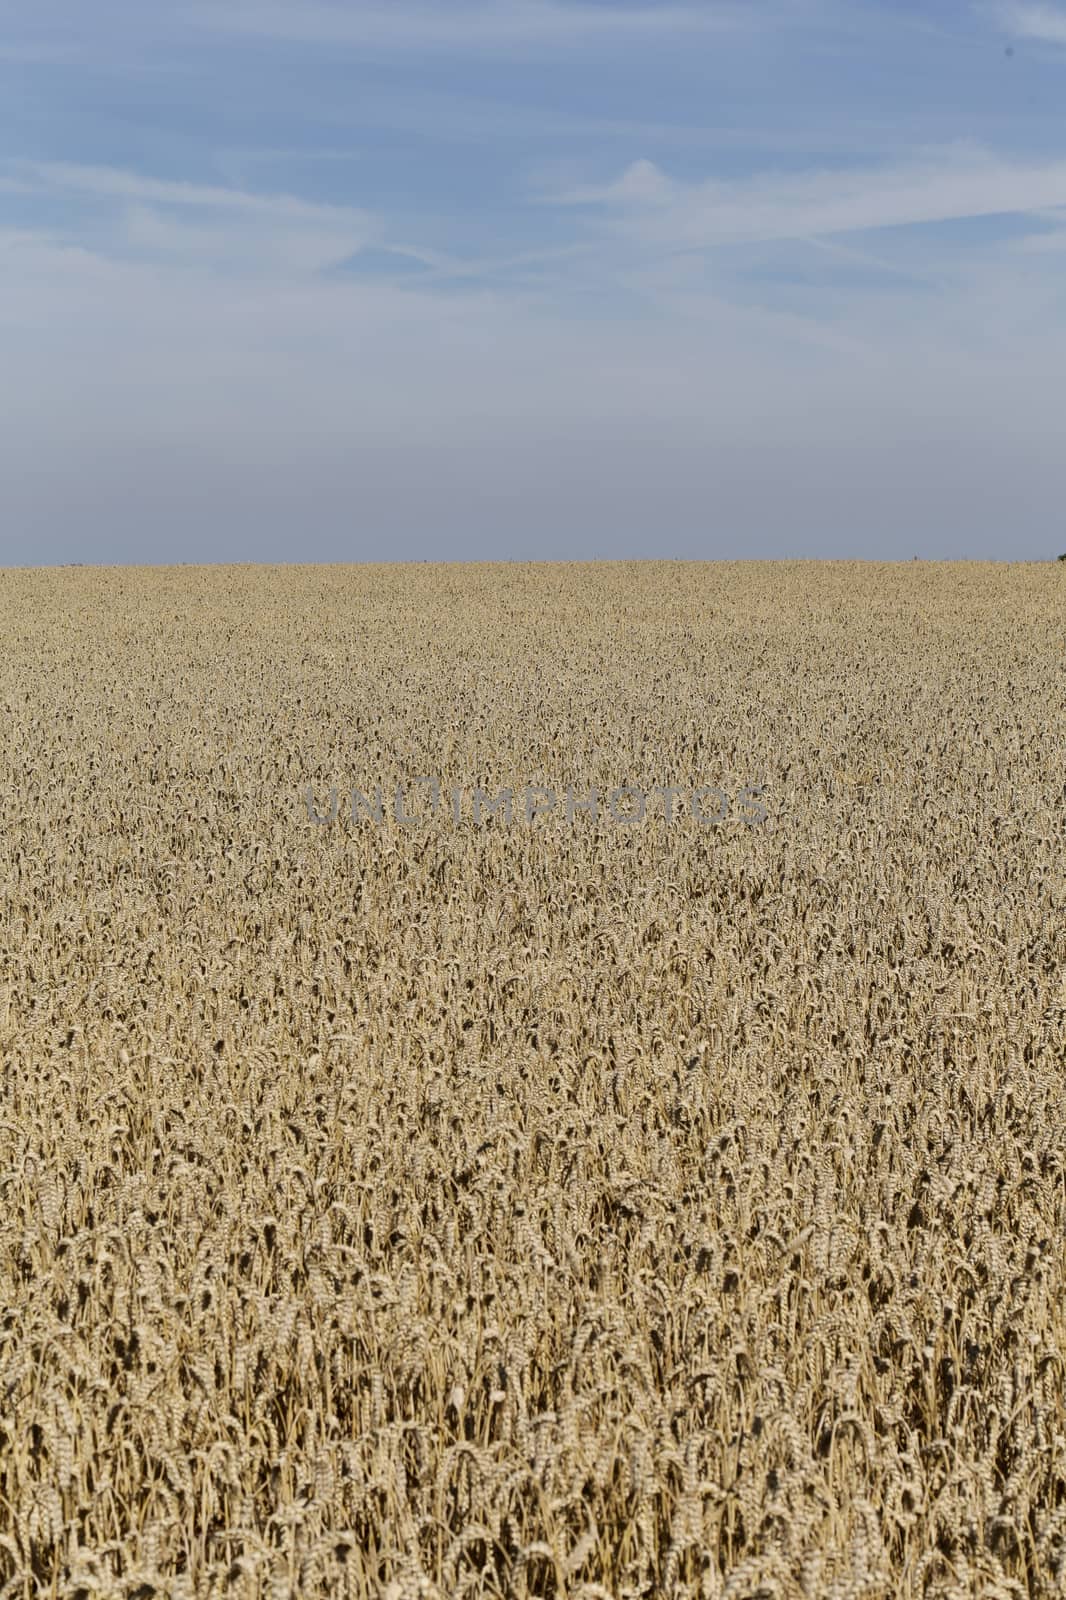 Golden ears of wheat on the field